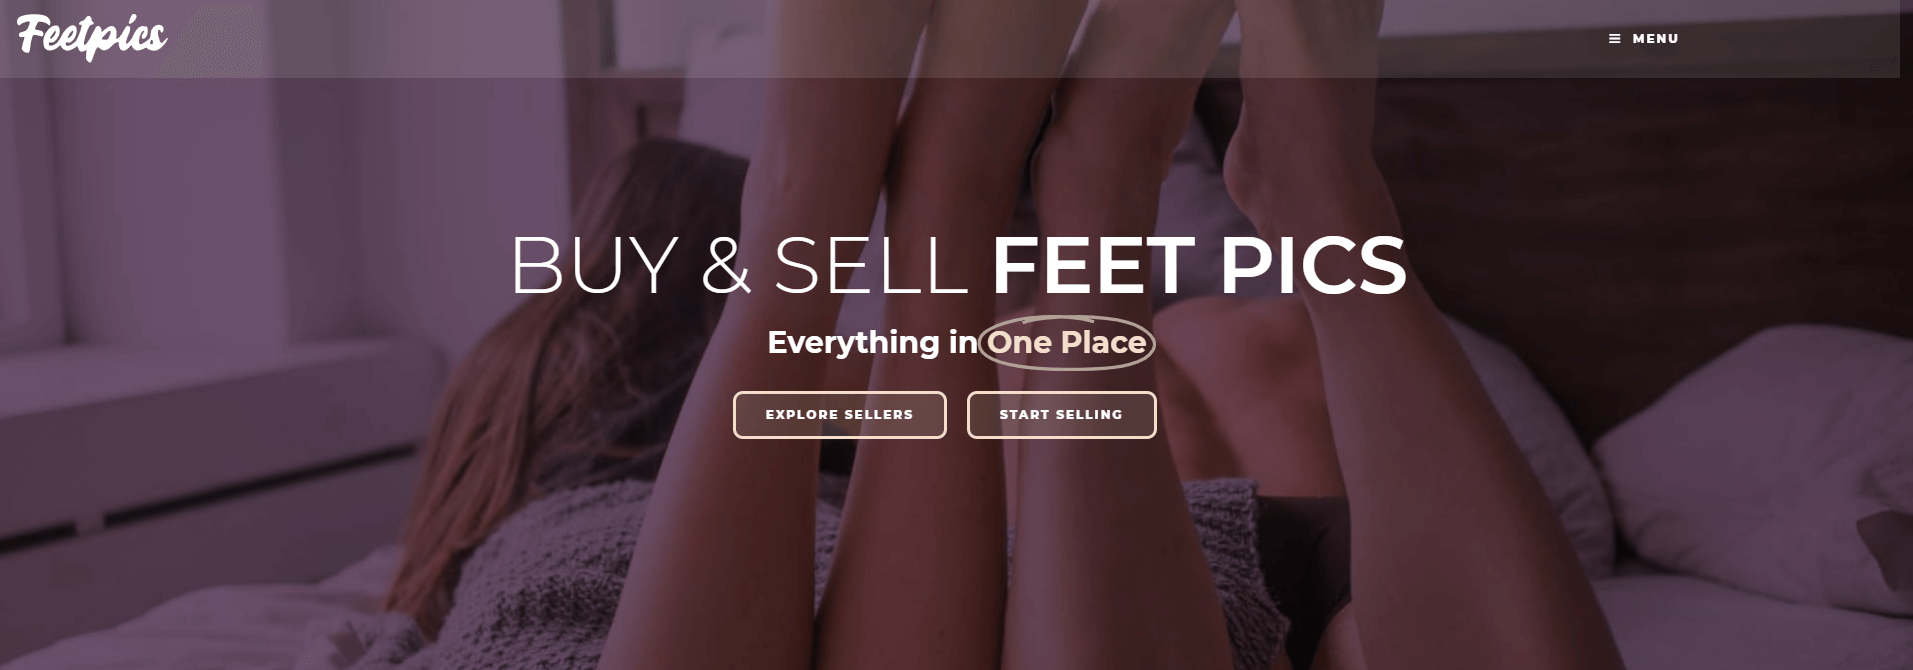 feetpics screenshot how to get started selling feet pics